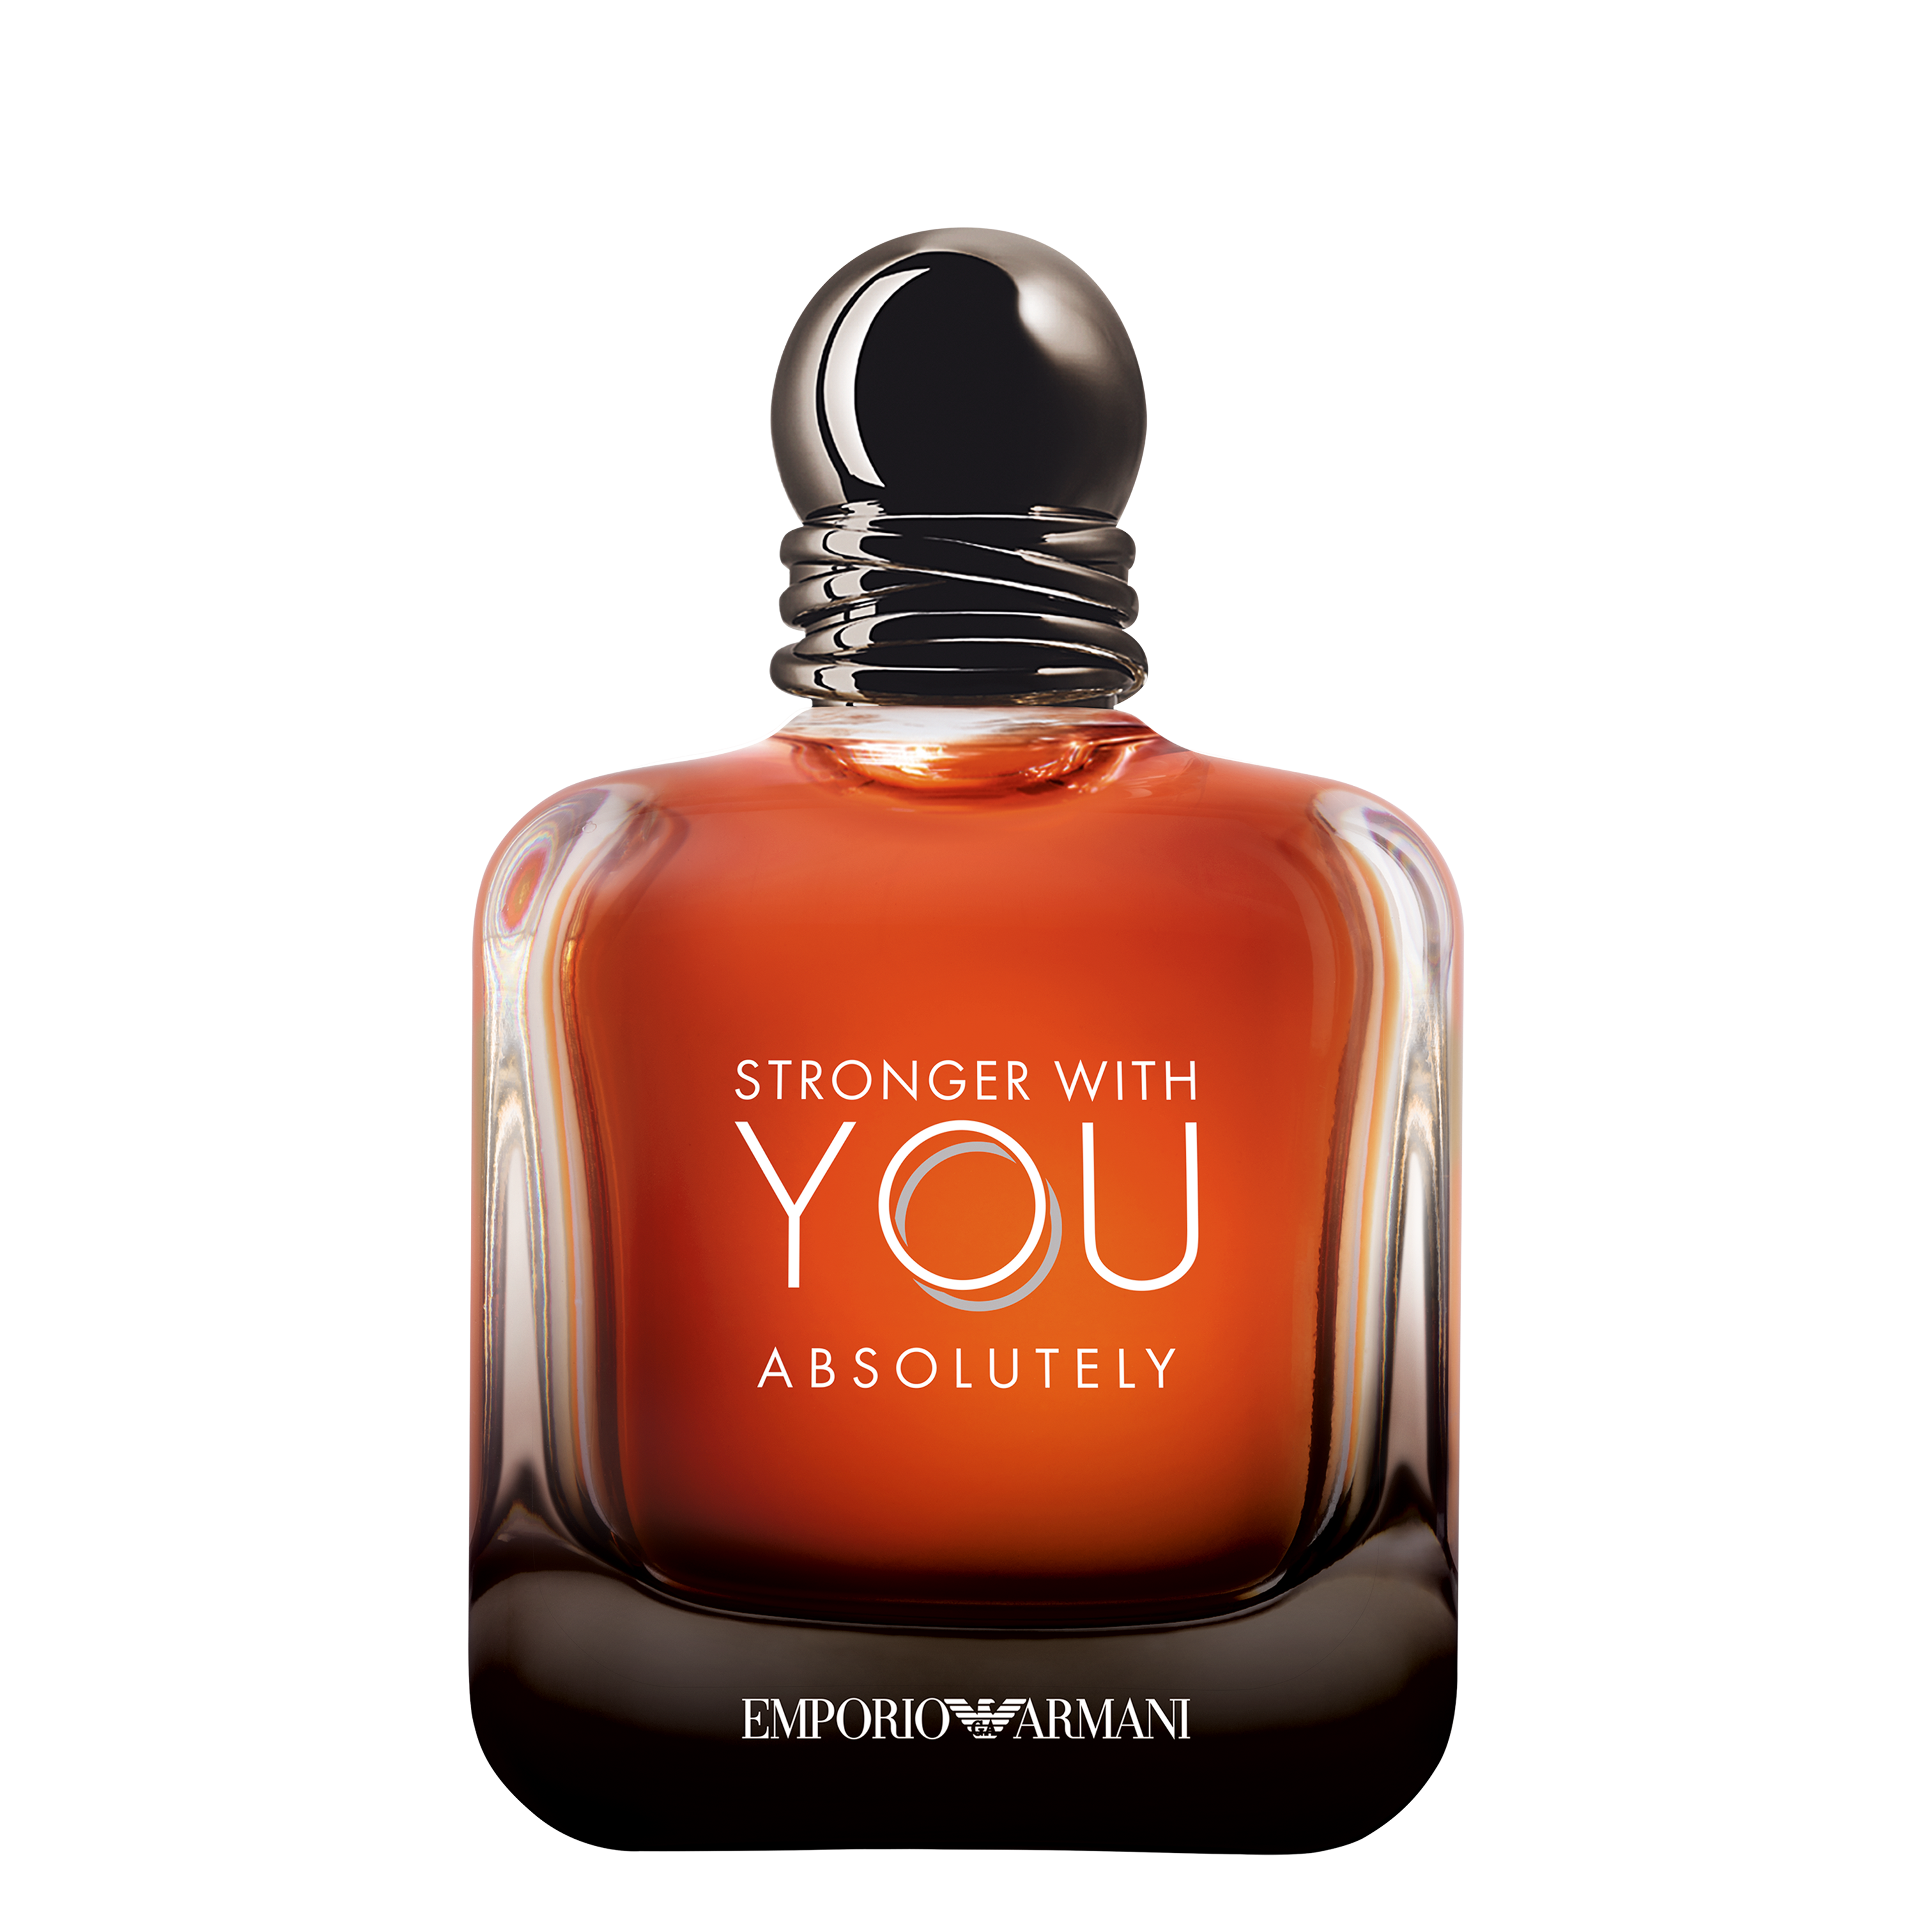 Armani Emporio Armani Stronger With You Absolutely Eau De Parfum 1